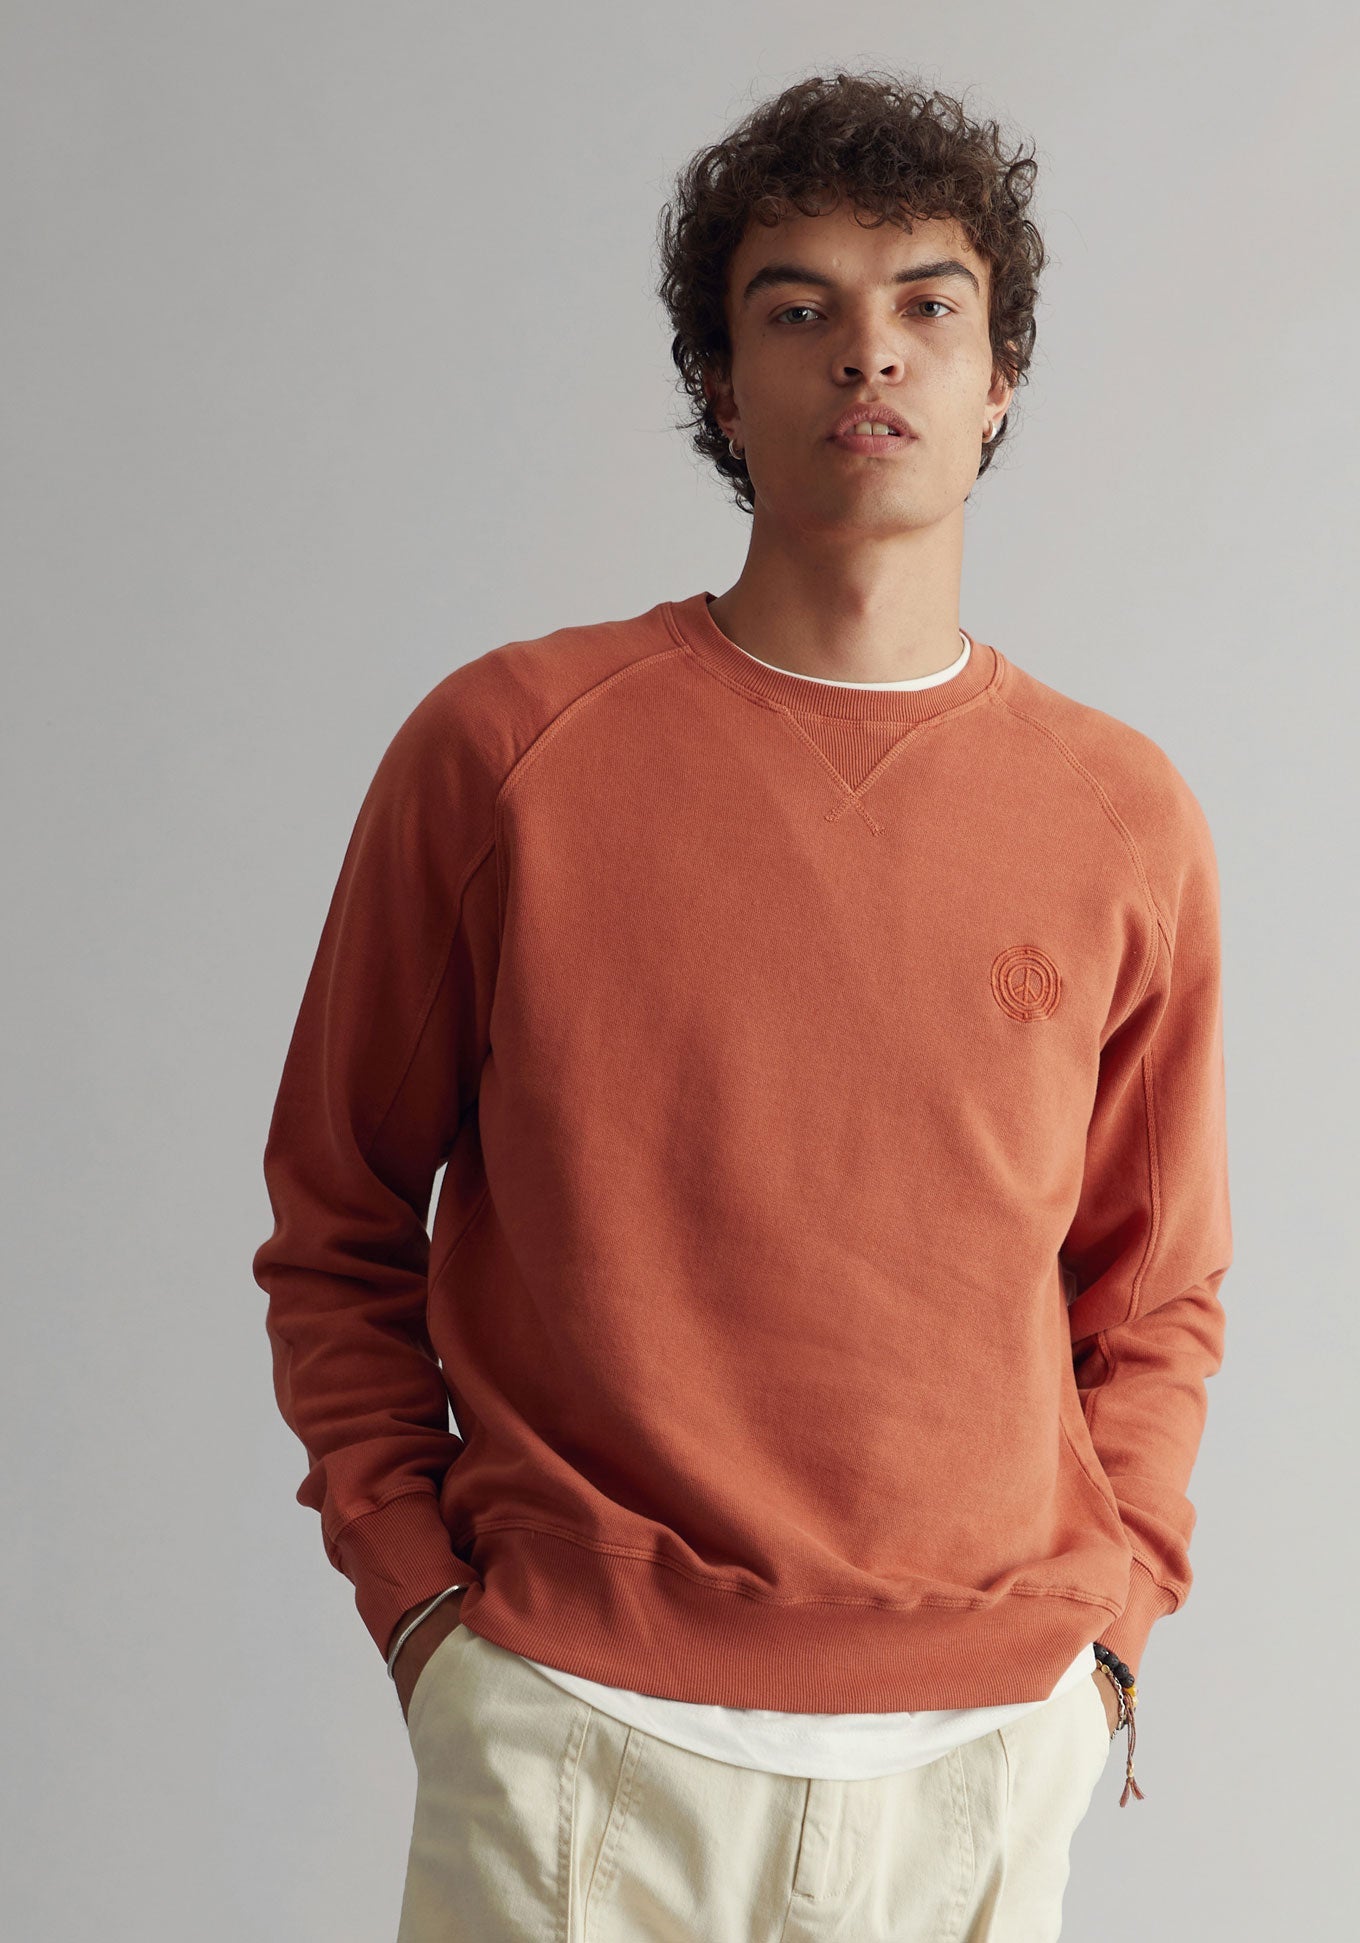 Orange sweater ANTON made of organic cotton by Komodo